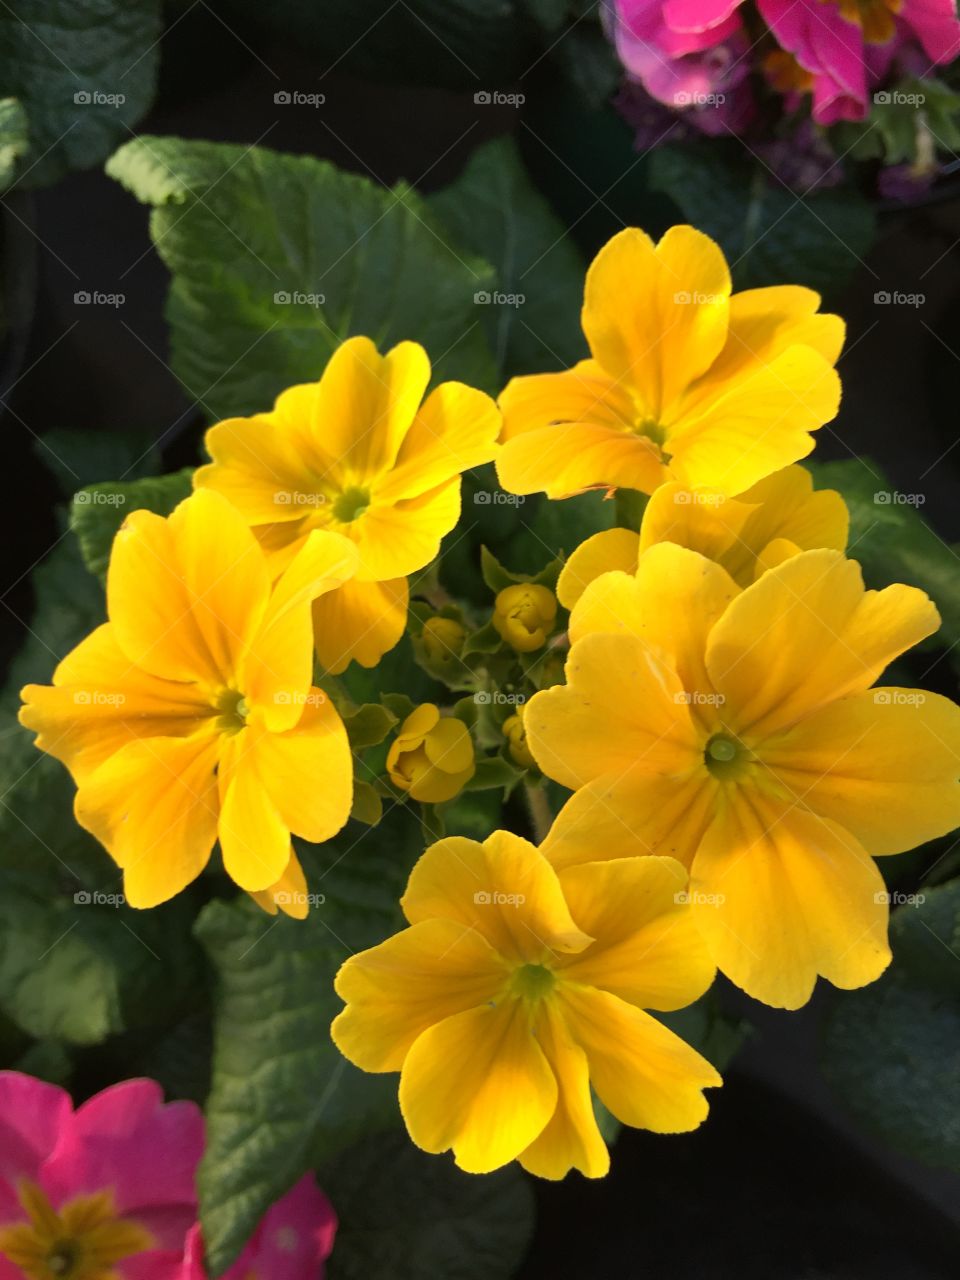 Yellow
Flower